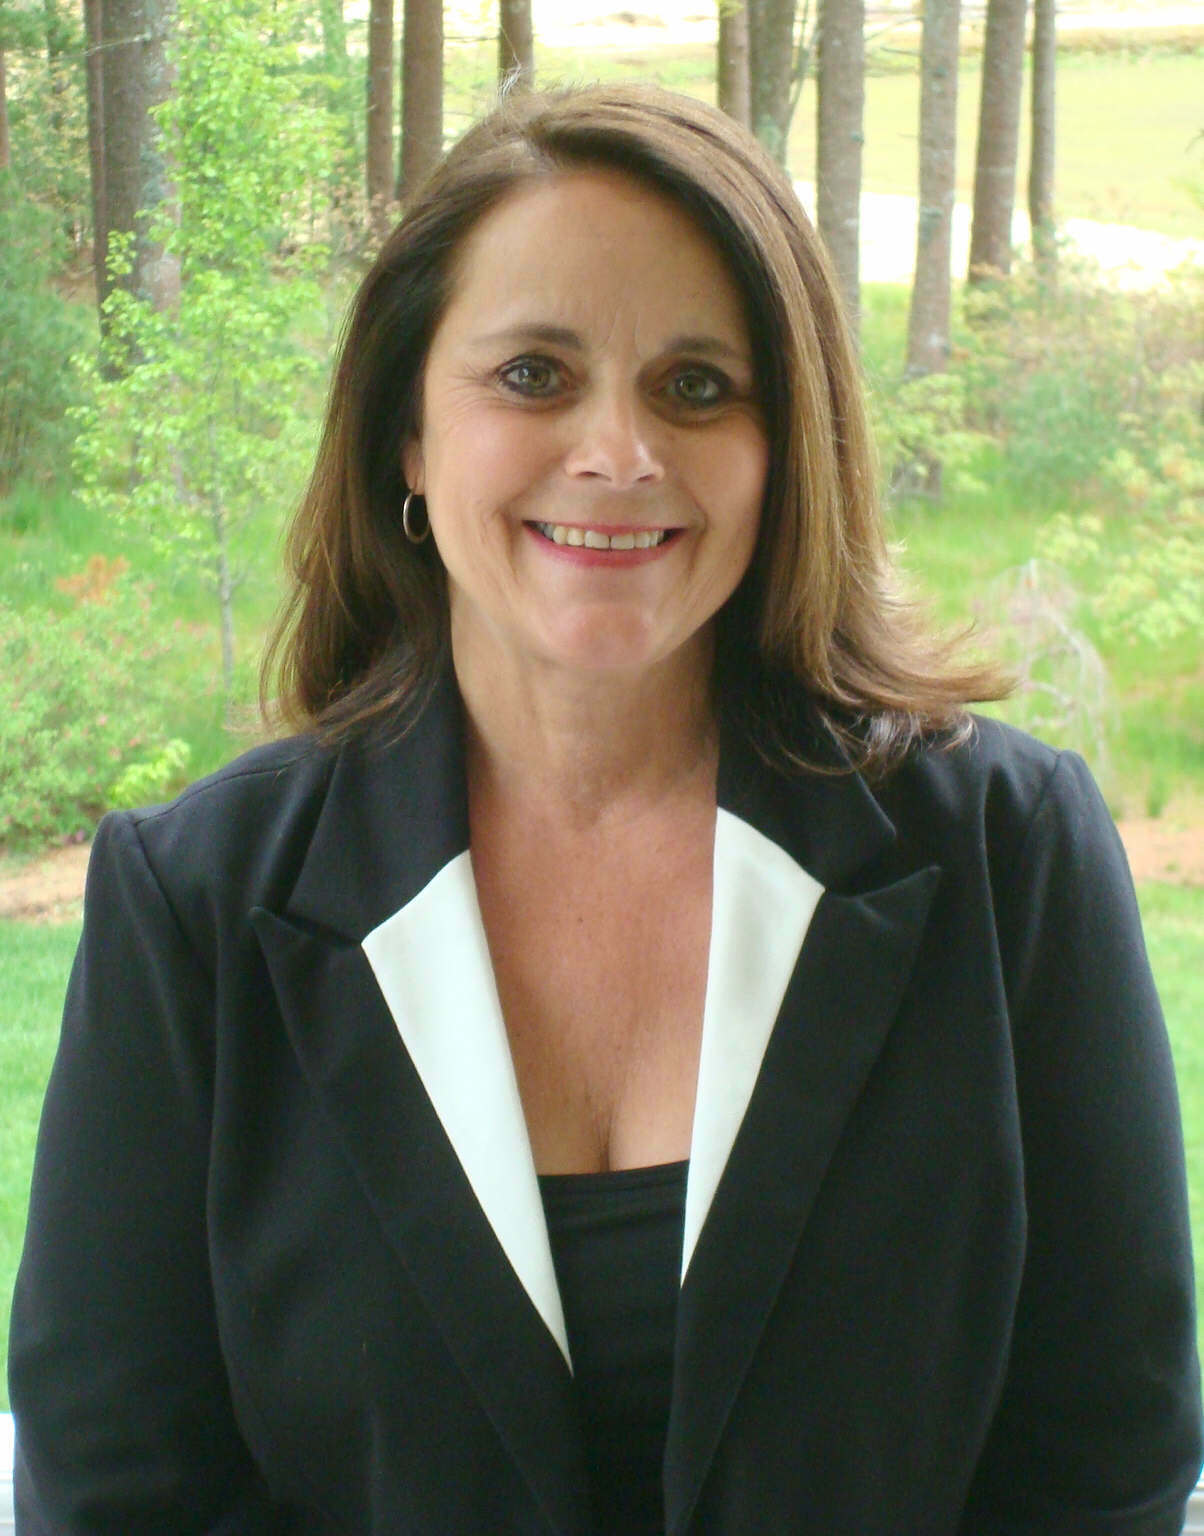 Brenda Tucker, Real Estate Salesperson in Carver, Tassinari & Associates, Inc